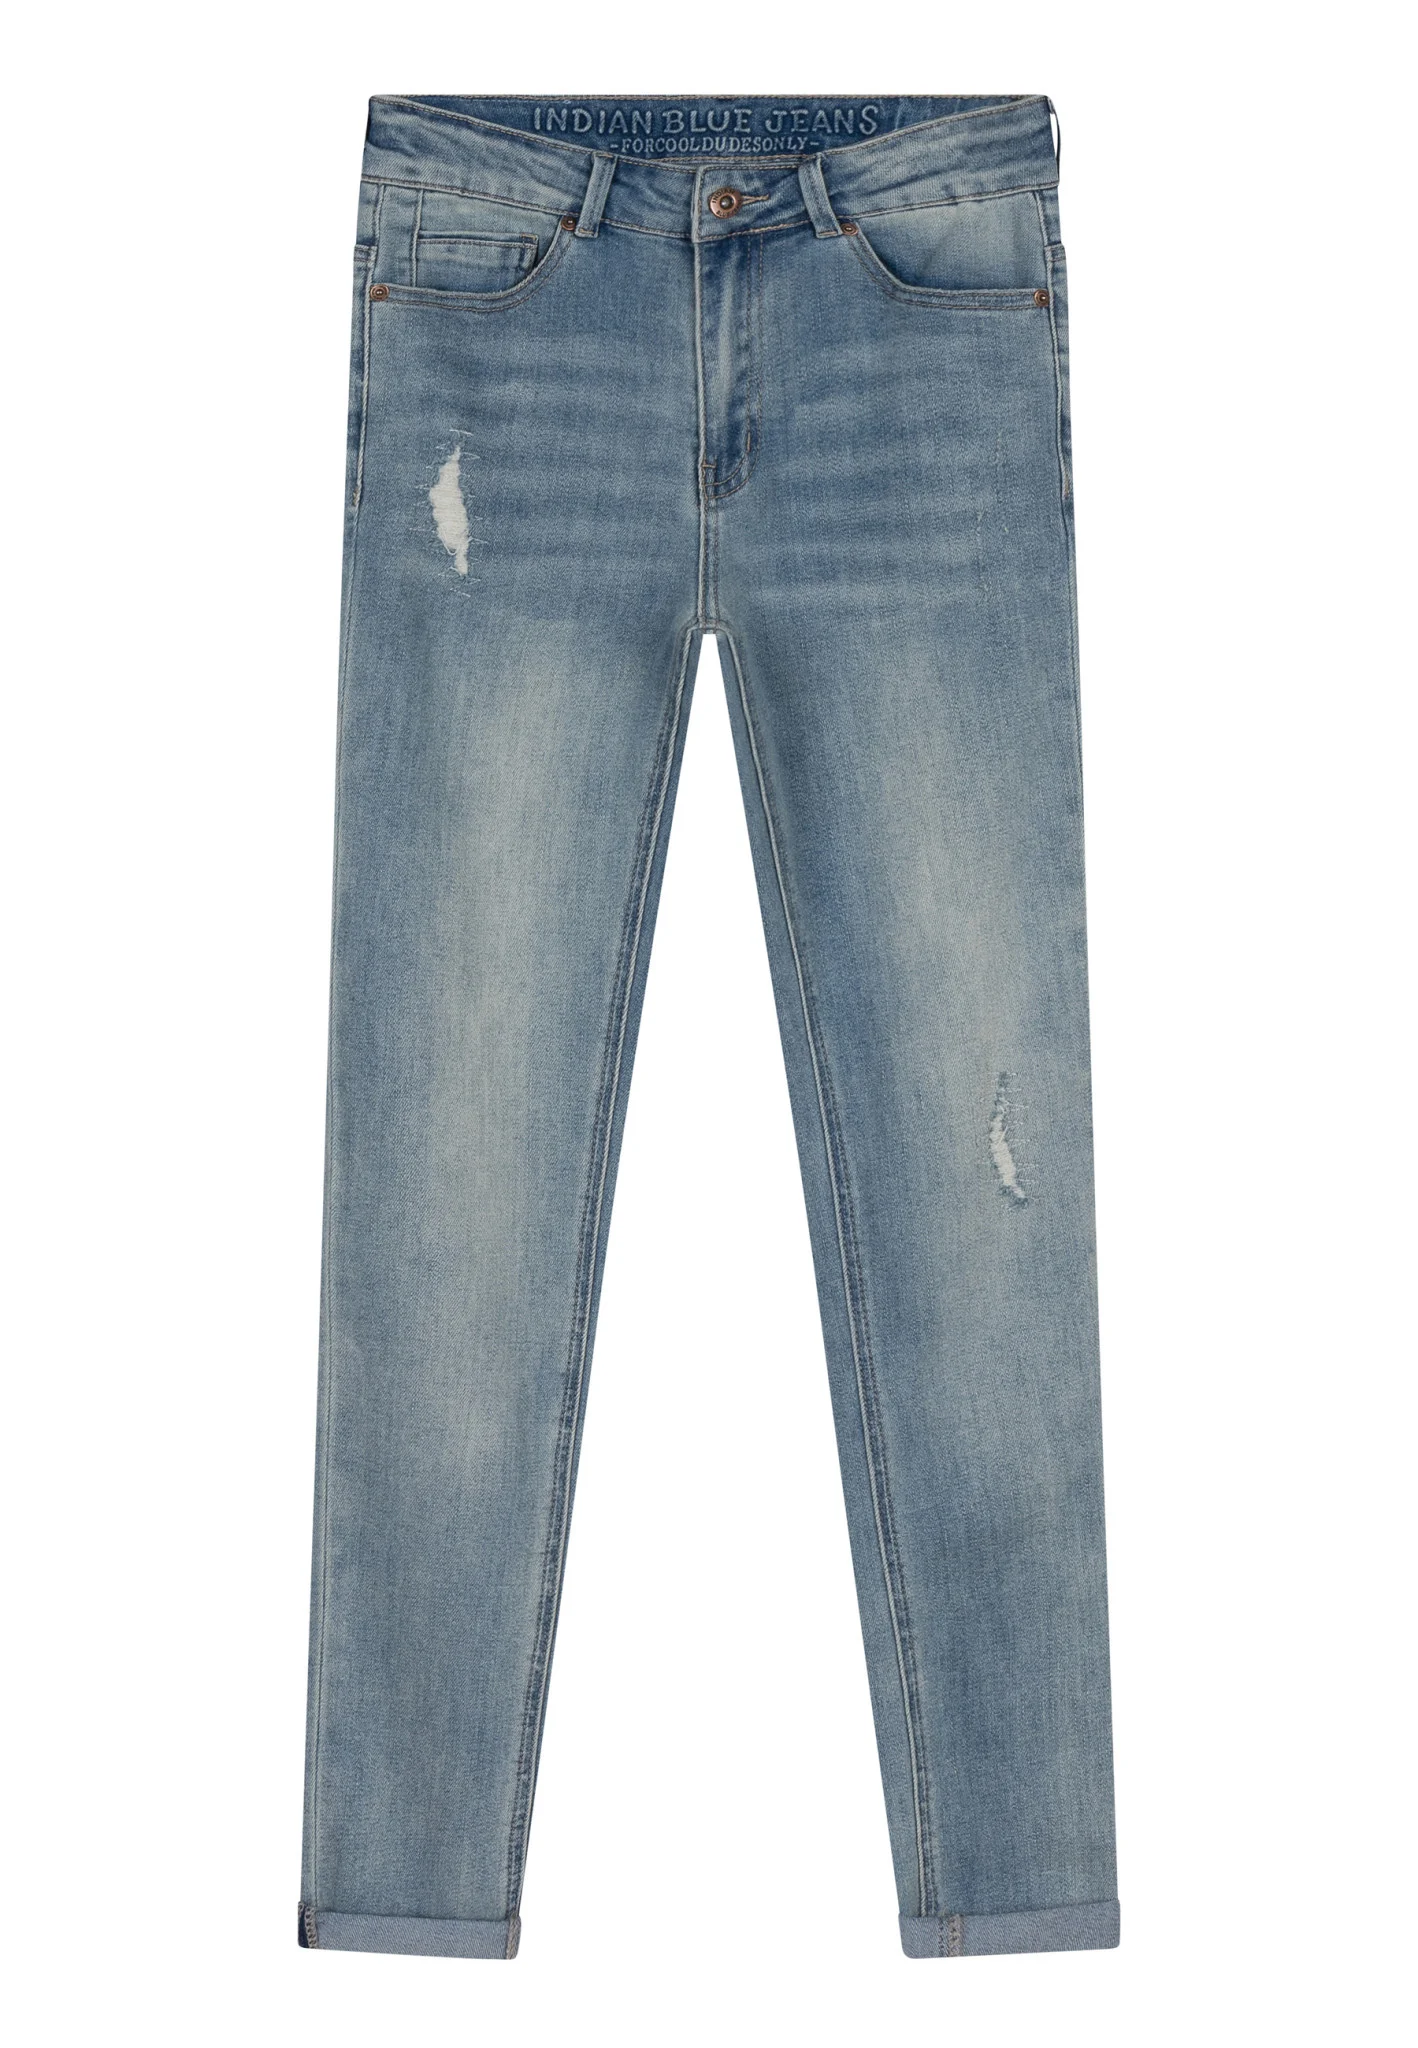 Afbeelding van Indian Blue Jongens jeans jay tapered fit damaged light denim